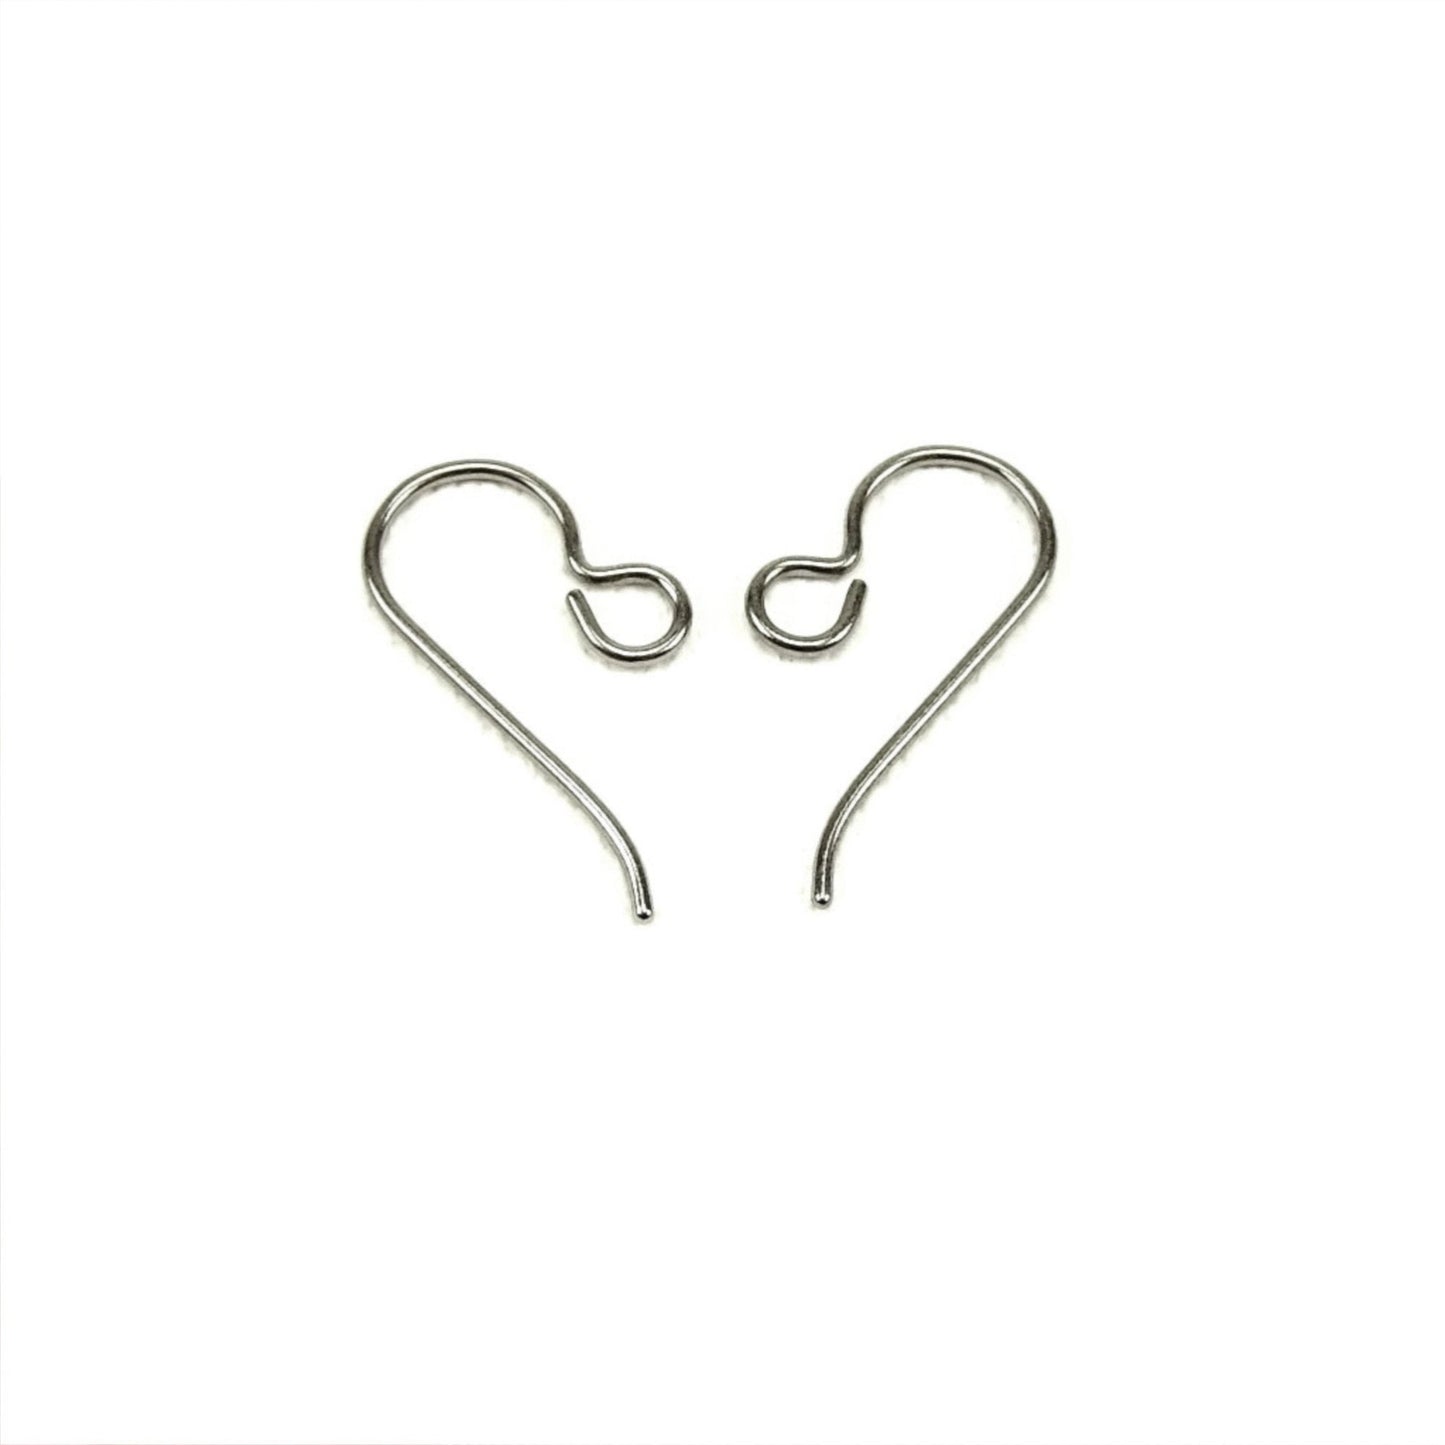 Niobium Earwire Hooks, French Hooks Pure Niobium Wire, Nickel Free Ear Wires, Hypoallergenic Ear Hooks, DIY Replacement Earring Hooks